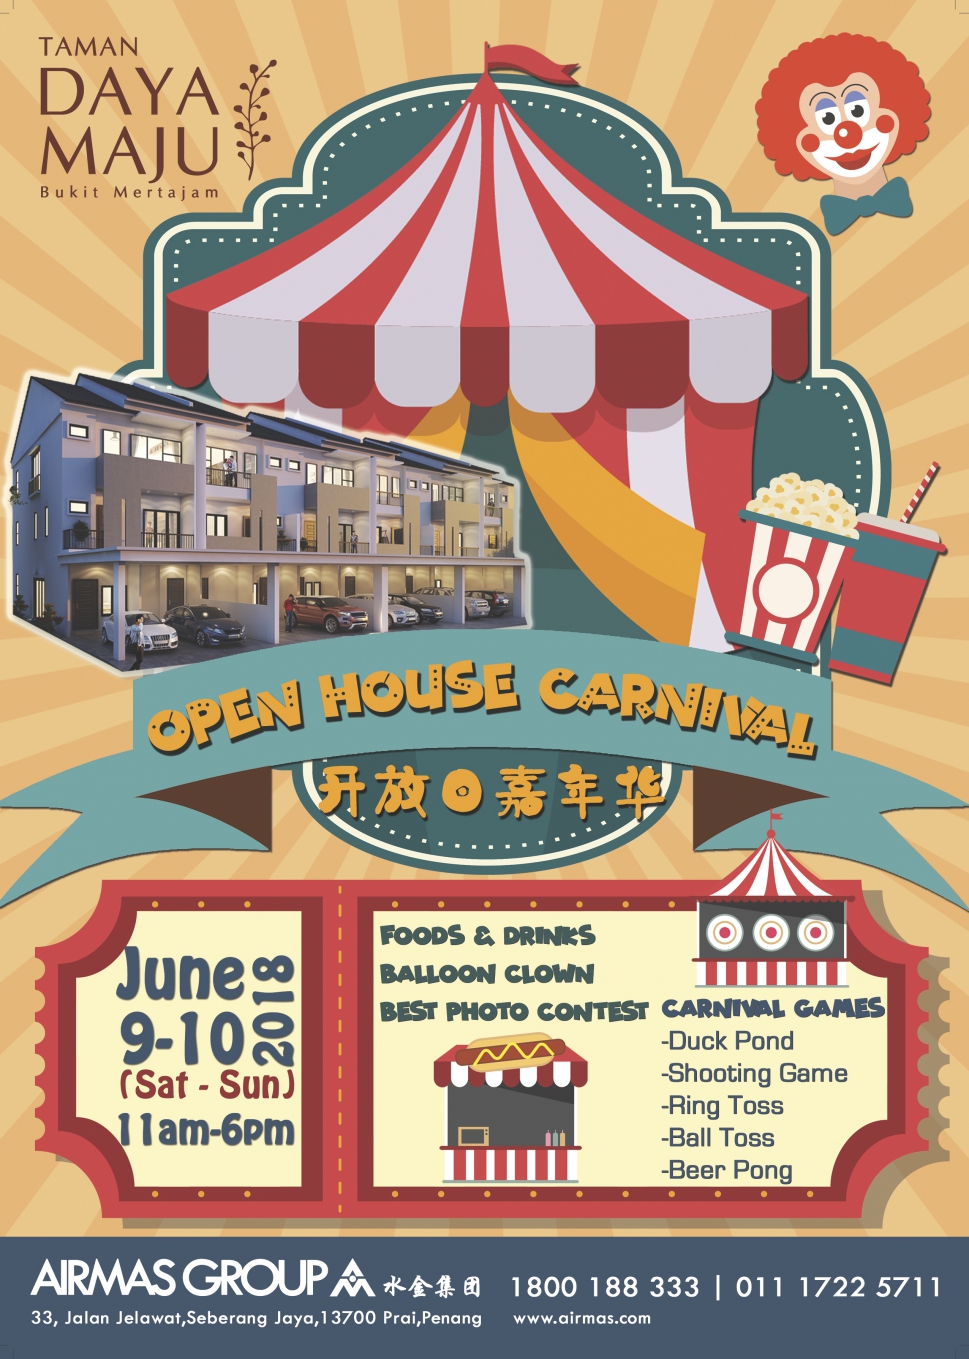 Taman Day Maju open house carnival June 2018